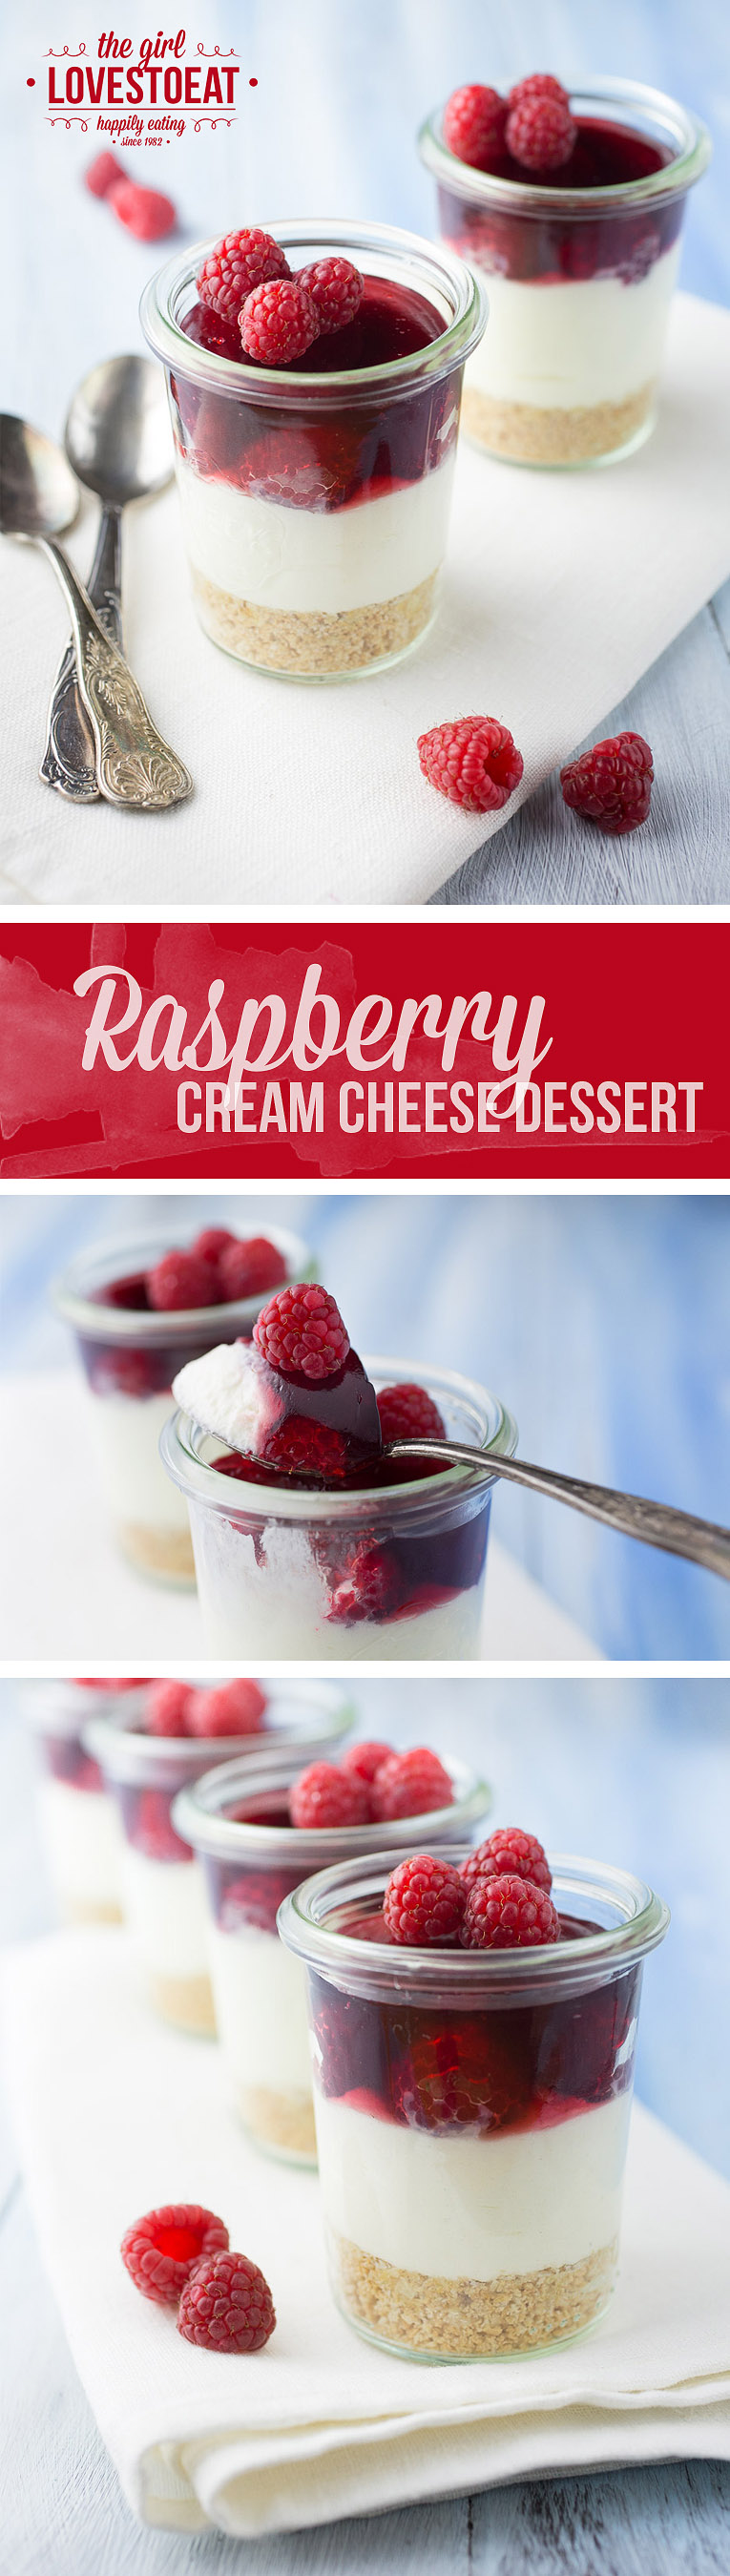 Raspberry Cream Cheese Dessert